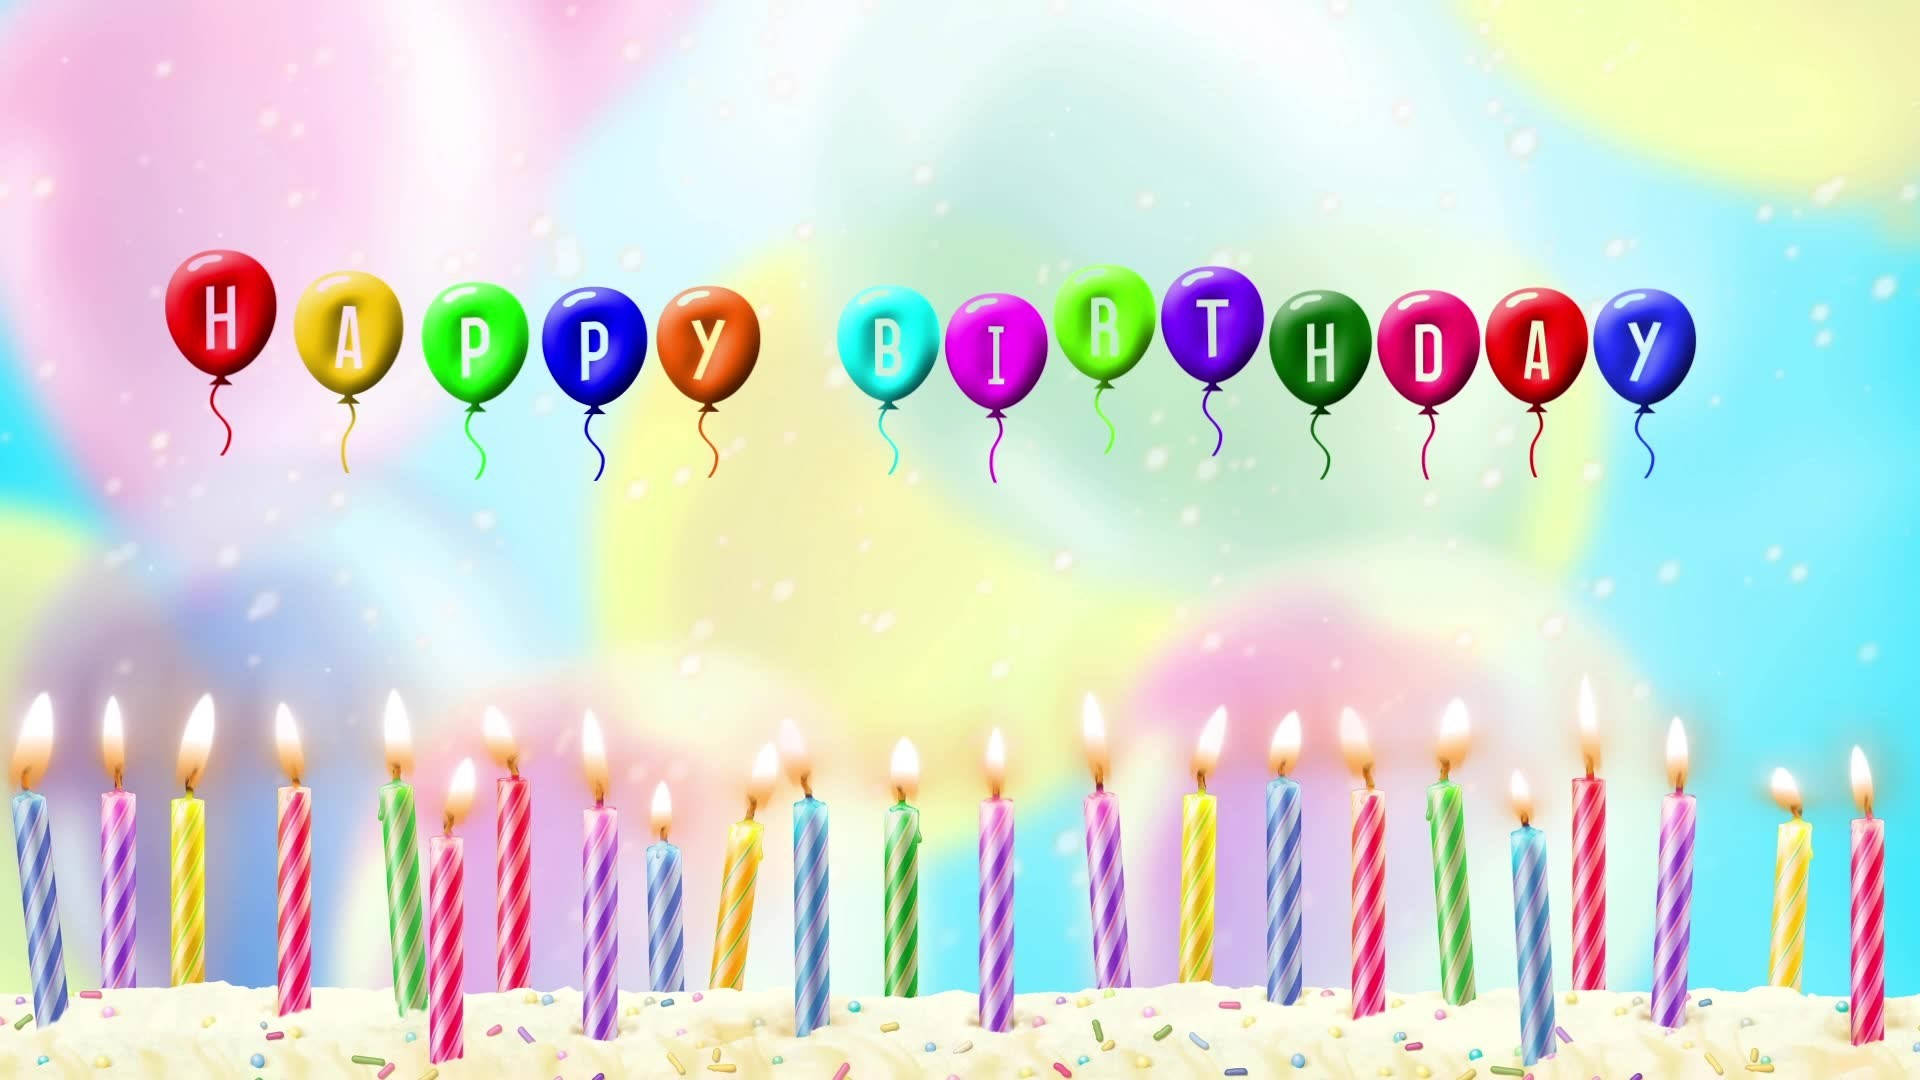 Caption: Joyful Celebration with Colorful Birthday Cake and Balloons Wallpaper